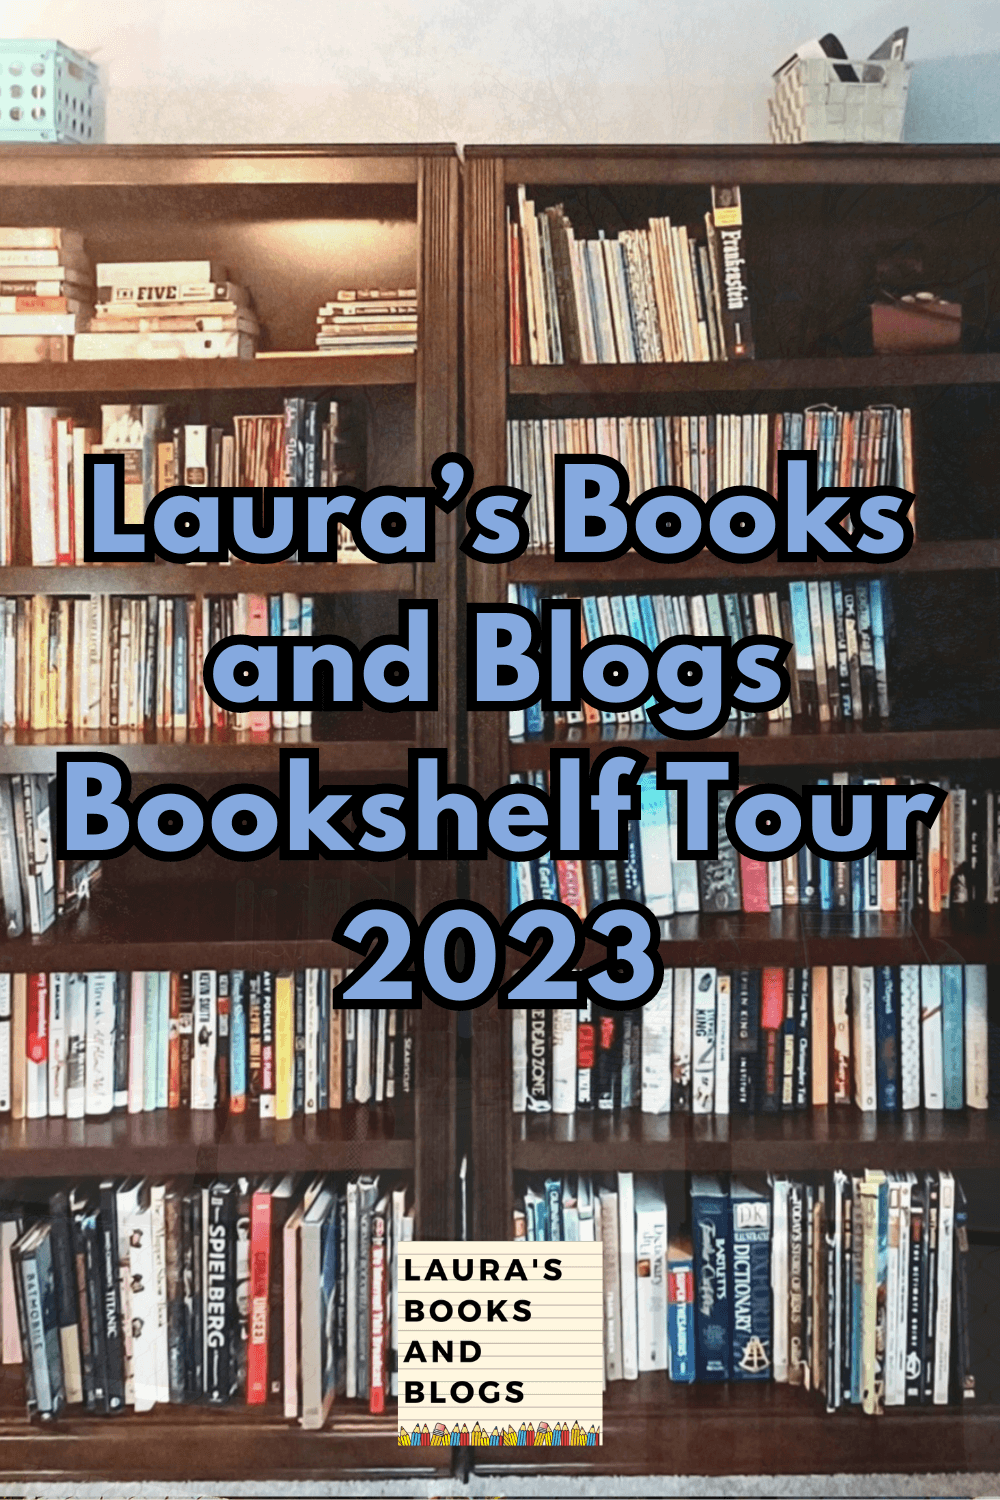 Bookshelf Tour pin